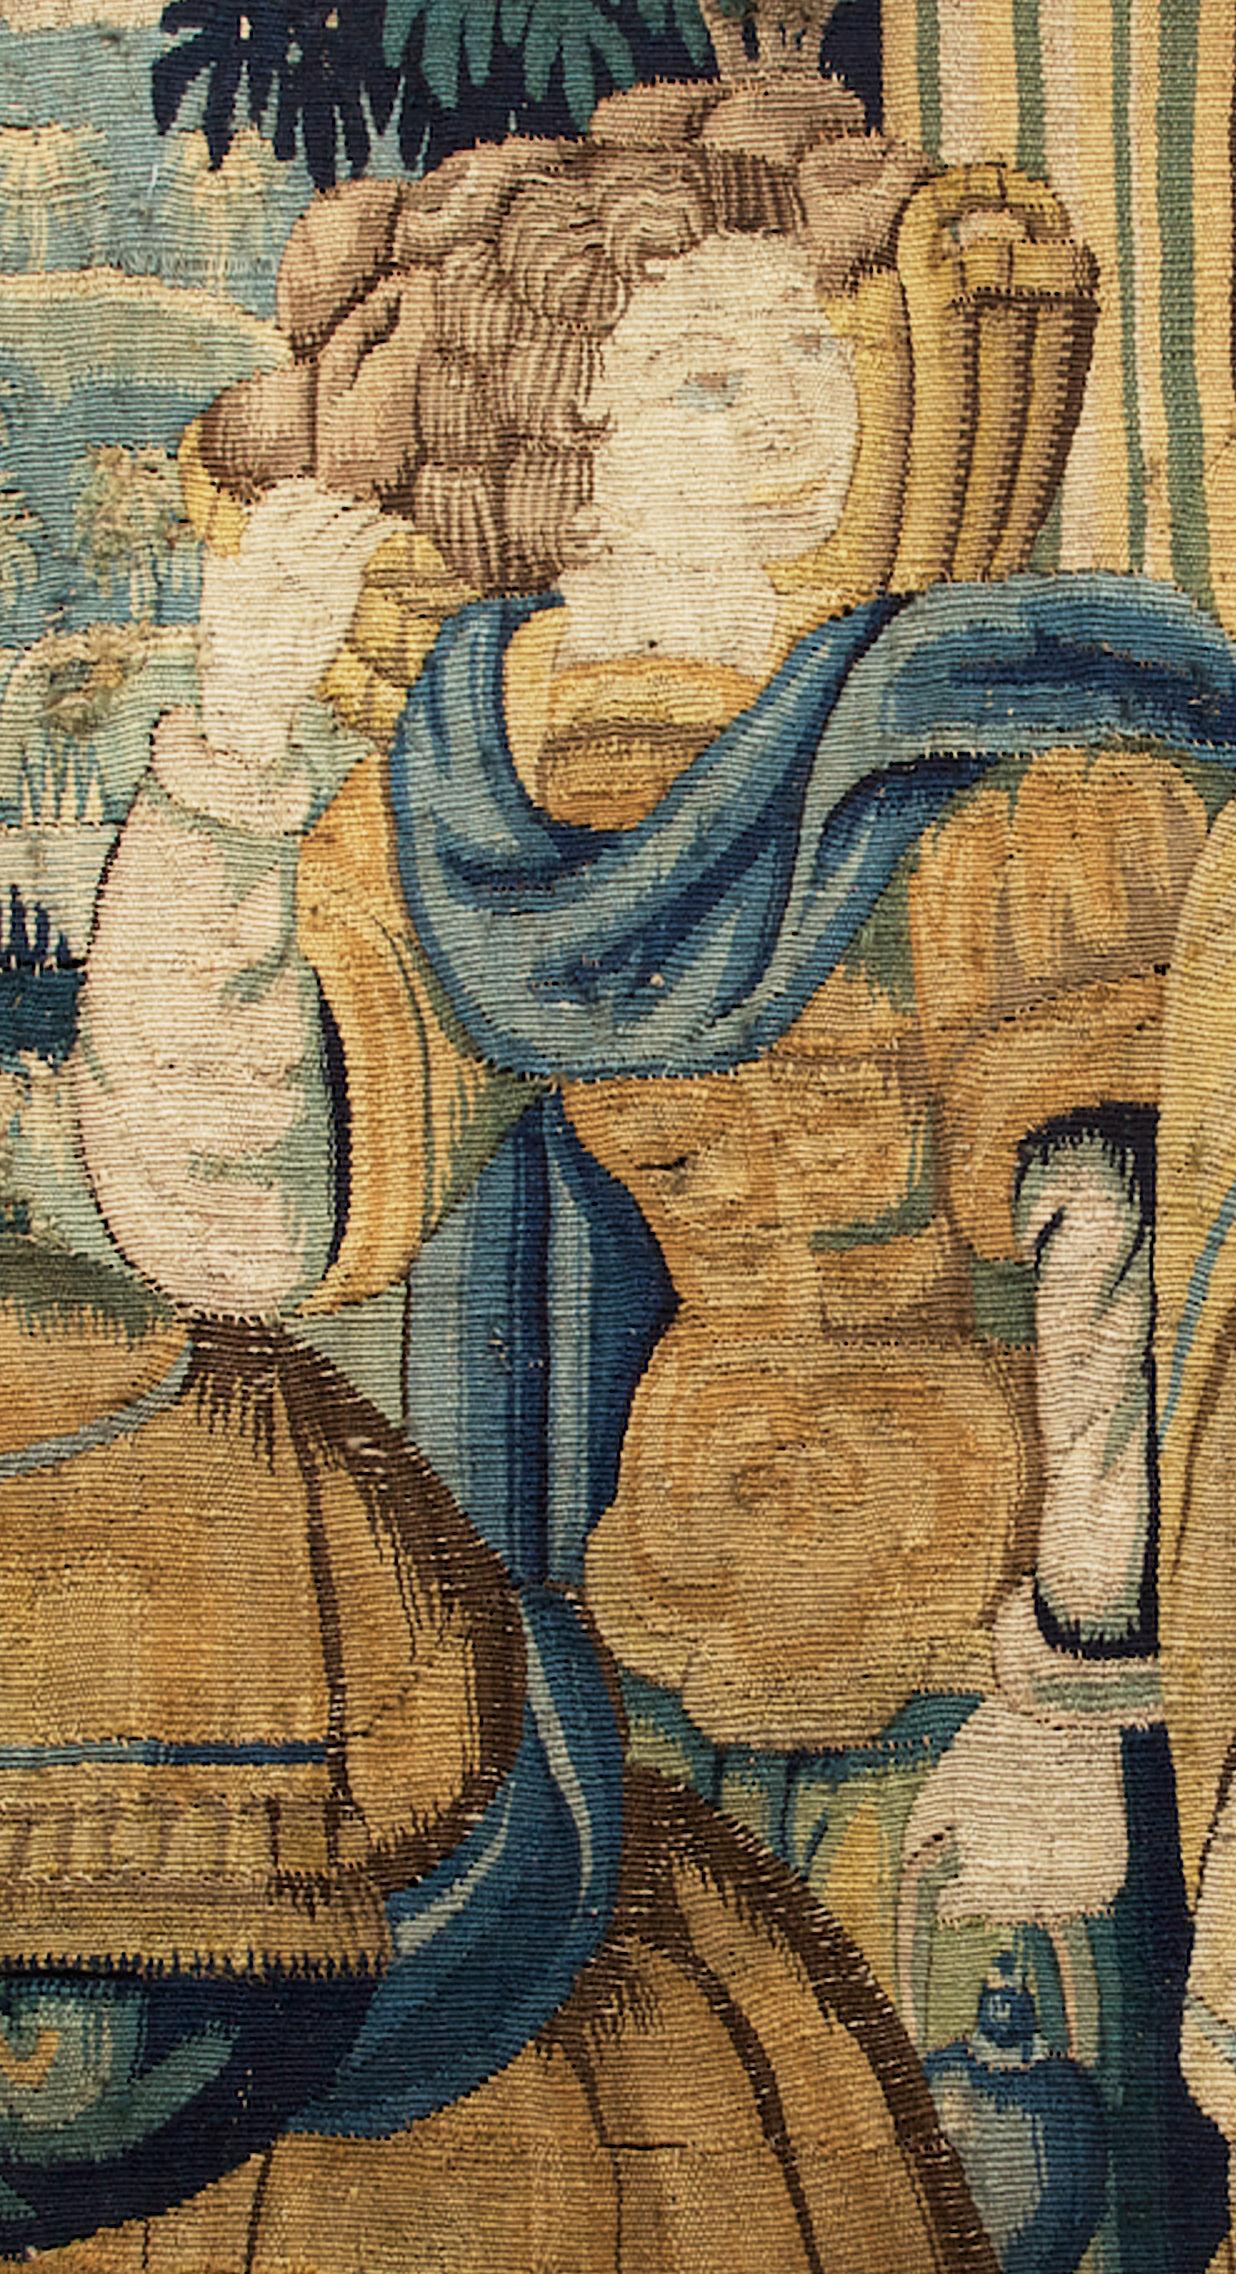 Renaissance 16th Century Brussels Tapestry, circa 1600